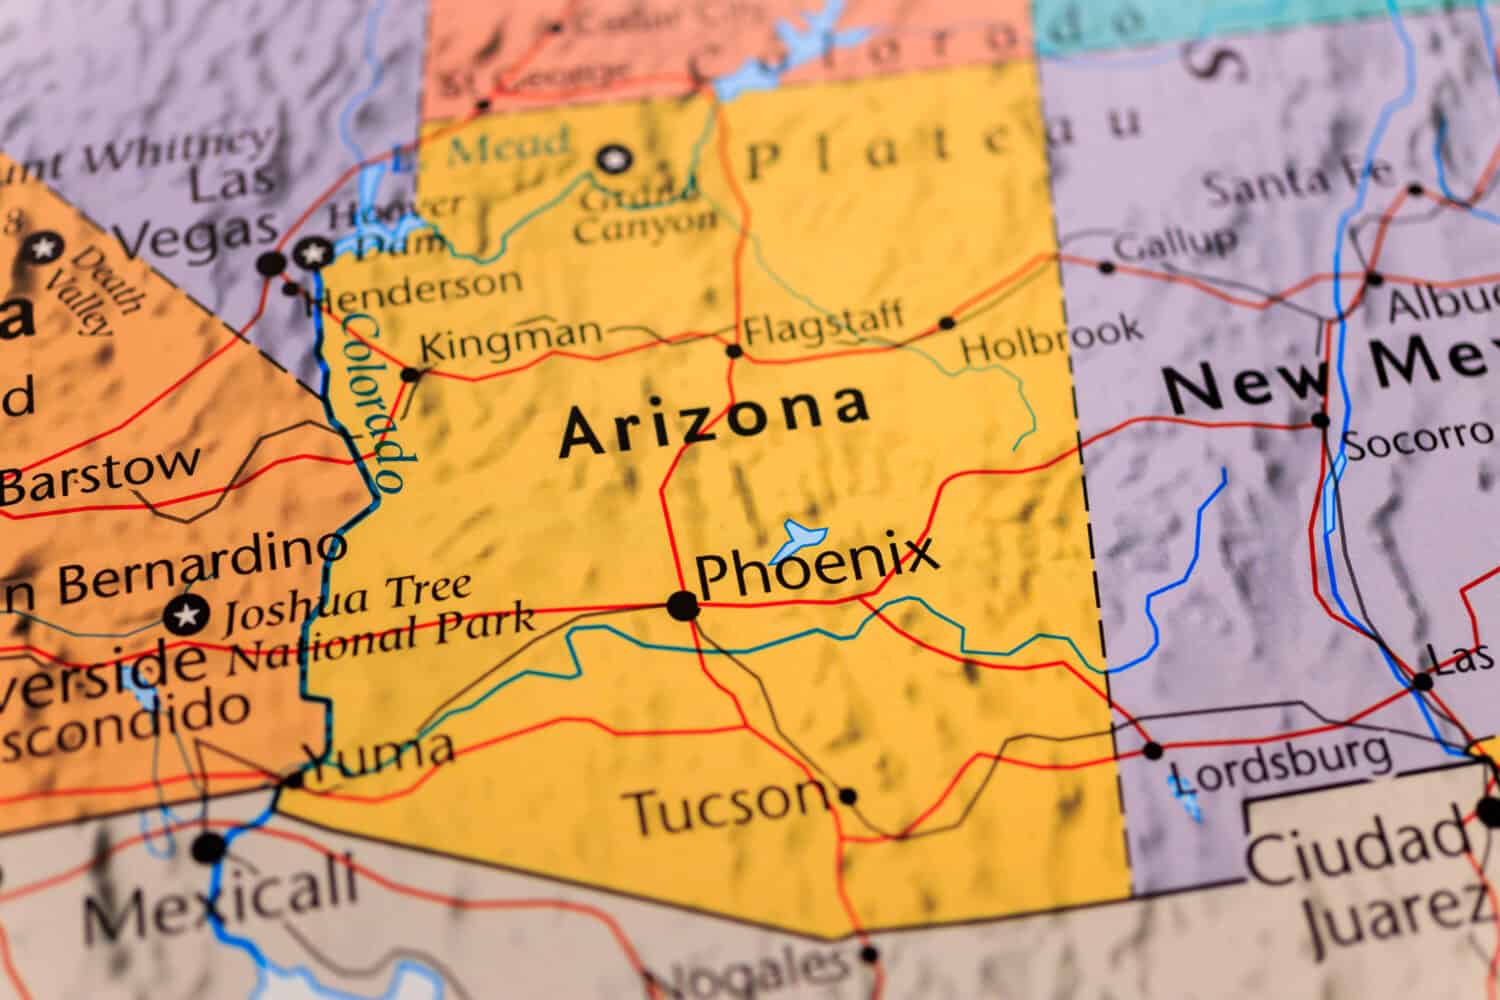 Arizona on the map by Alexander Lukatskiy